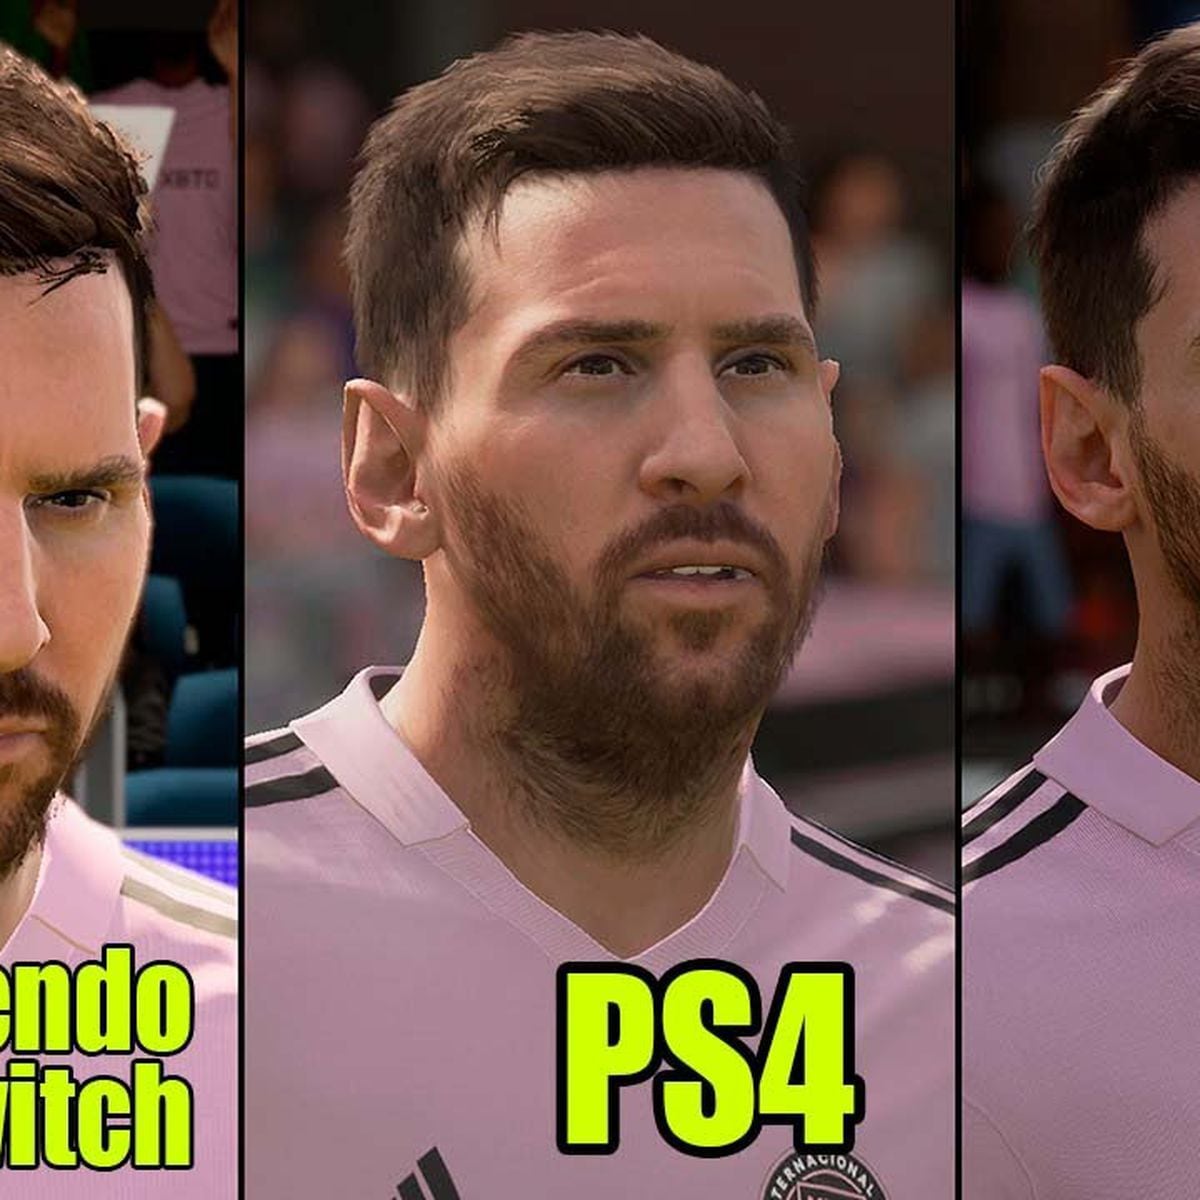 Comparativa definitiva de EA Sports FC 24 en Switch vs PlayStation